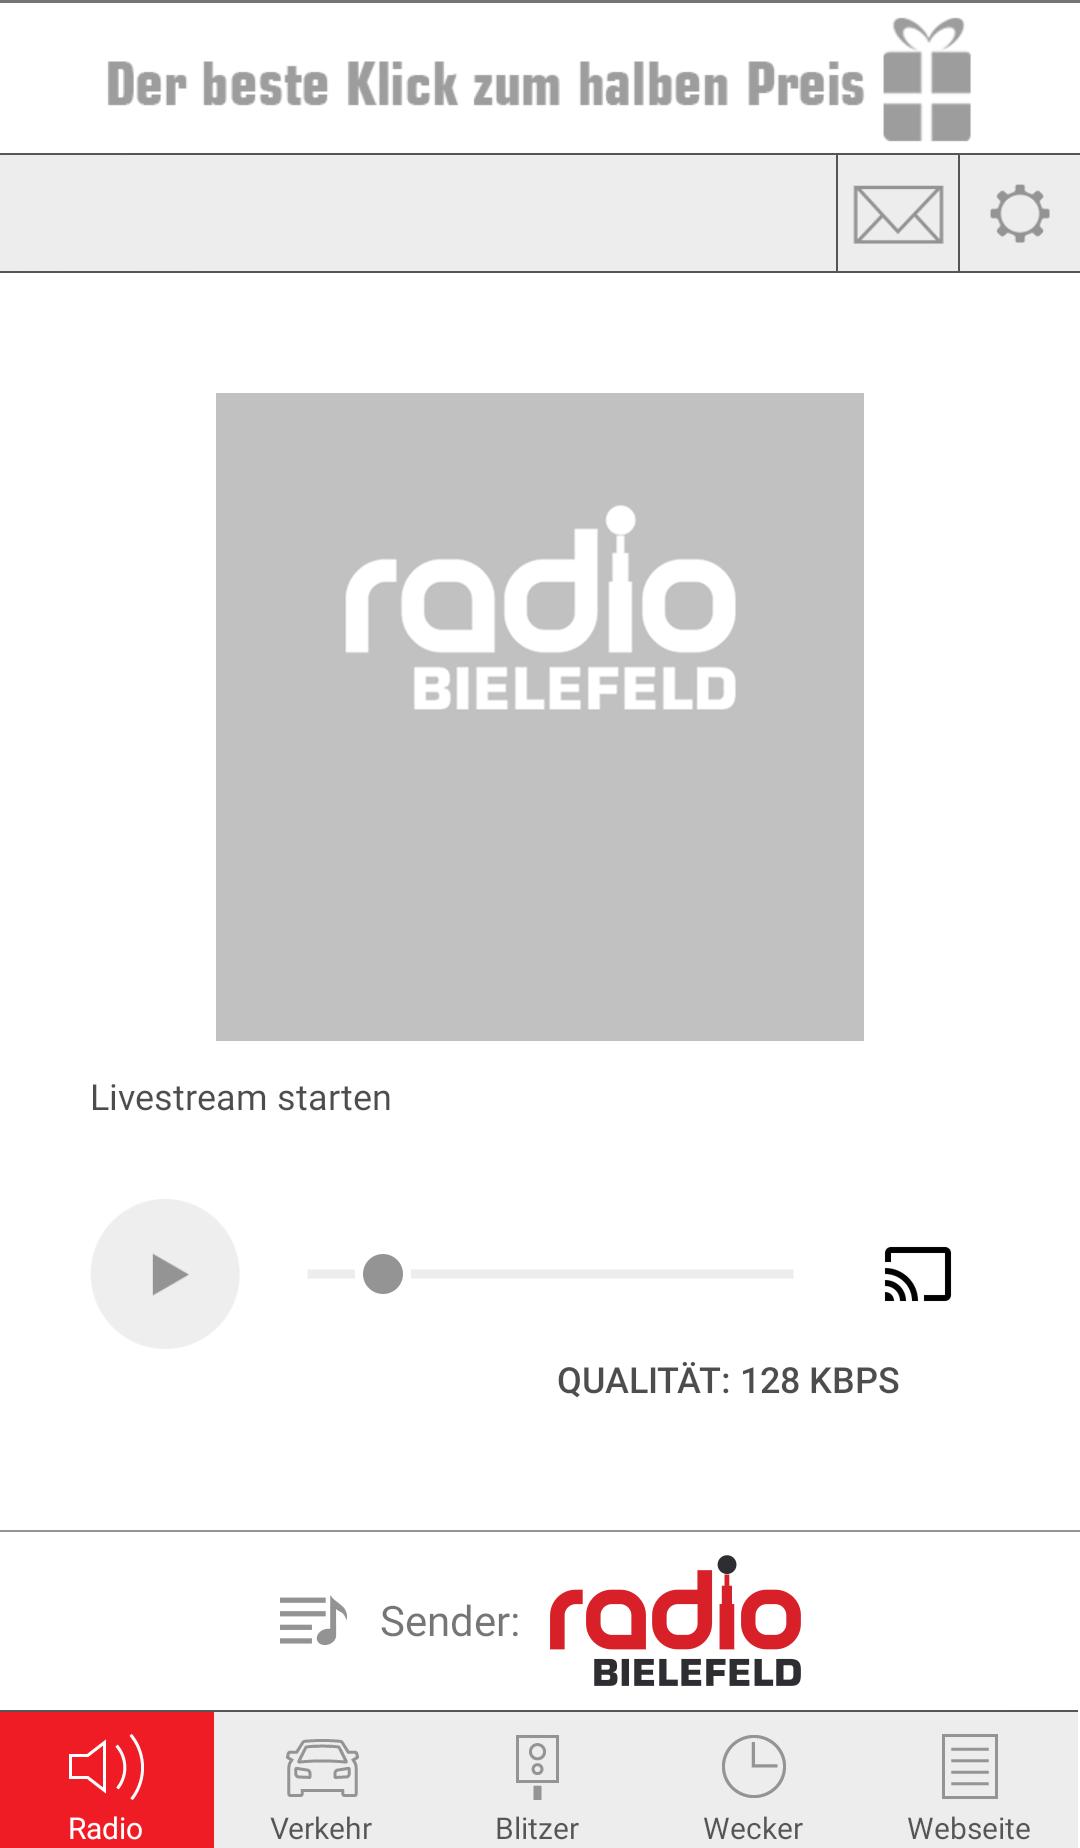 Radio Bielefeld for Android - APK Download